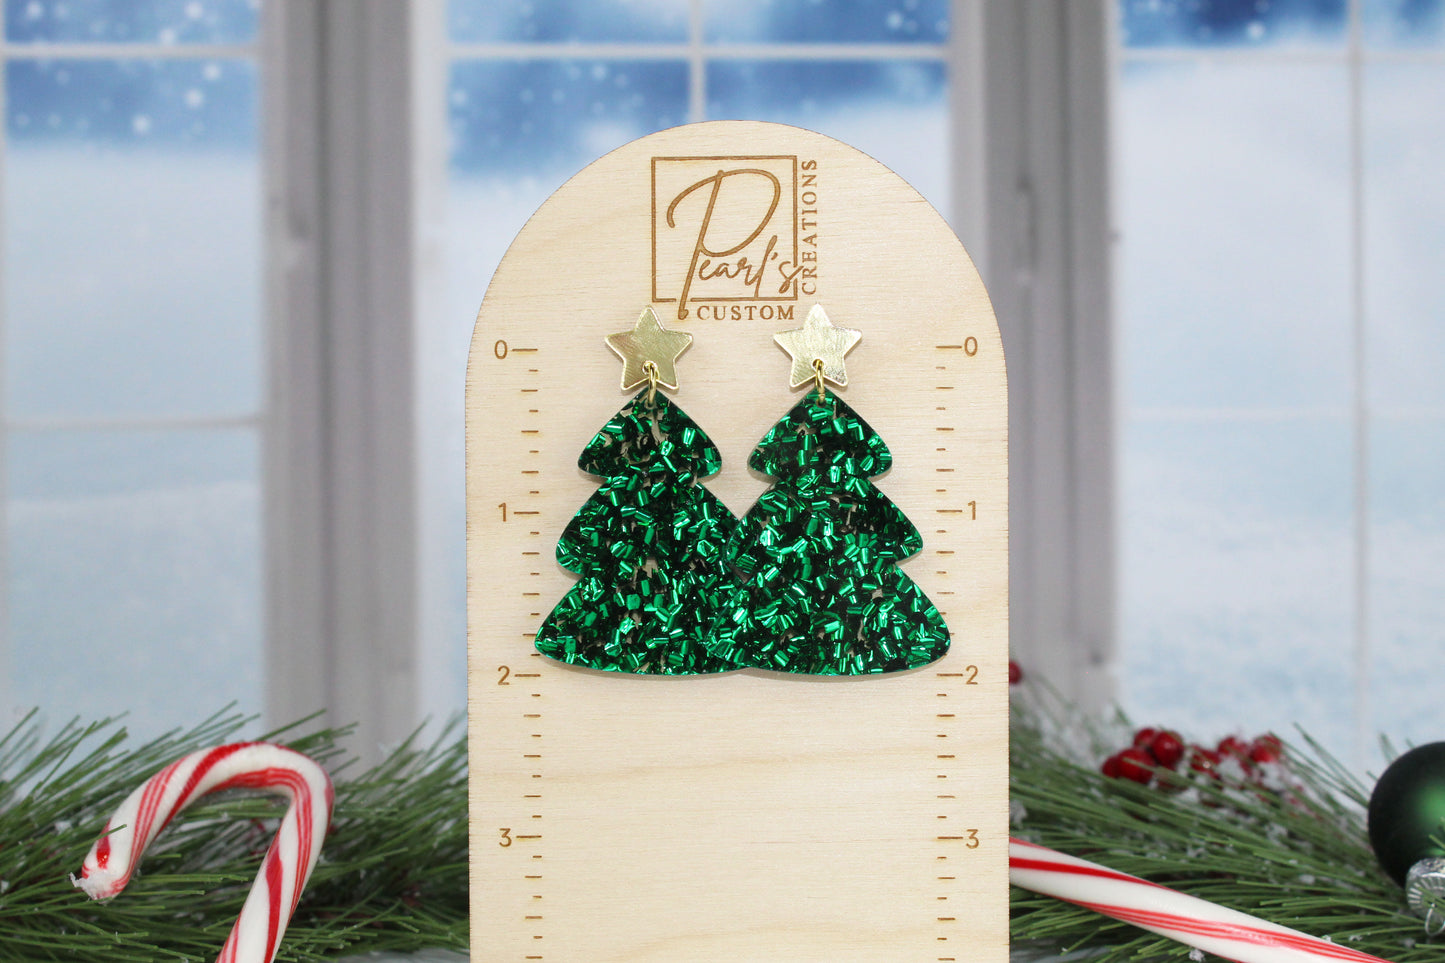 Chunky Green Glitter Christmas Tree Dangle Earrings